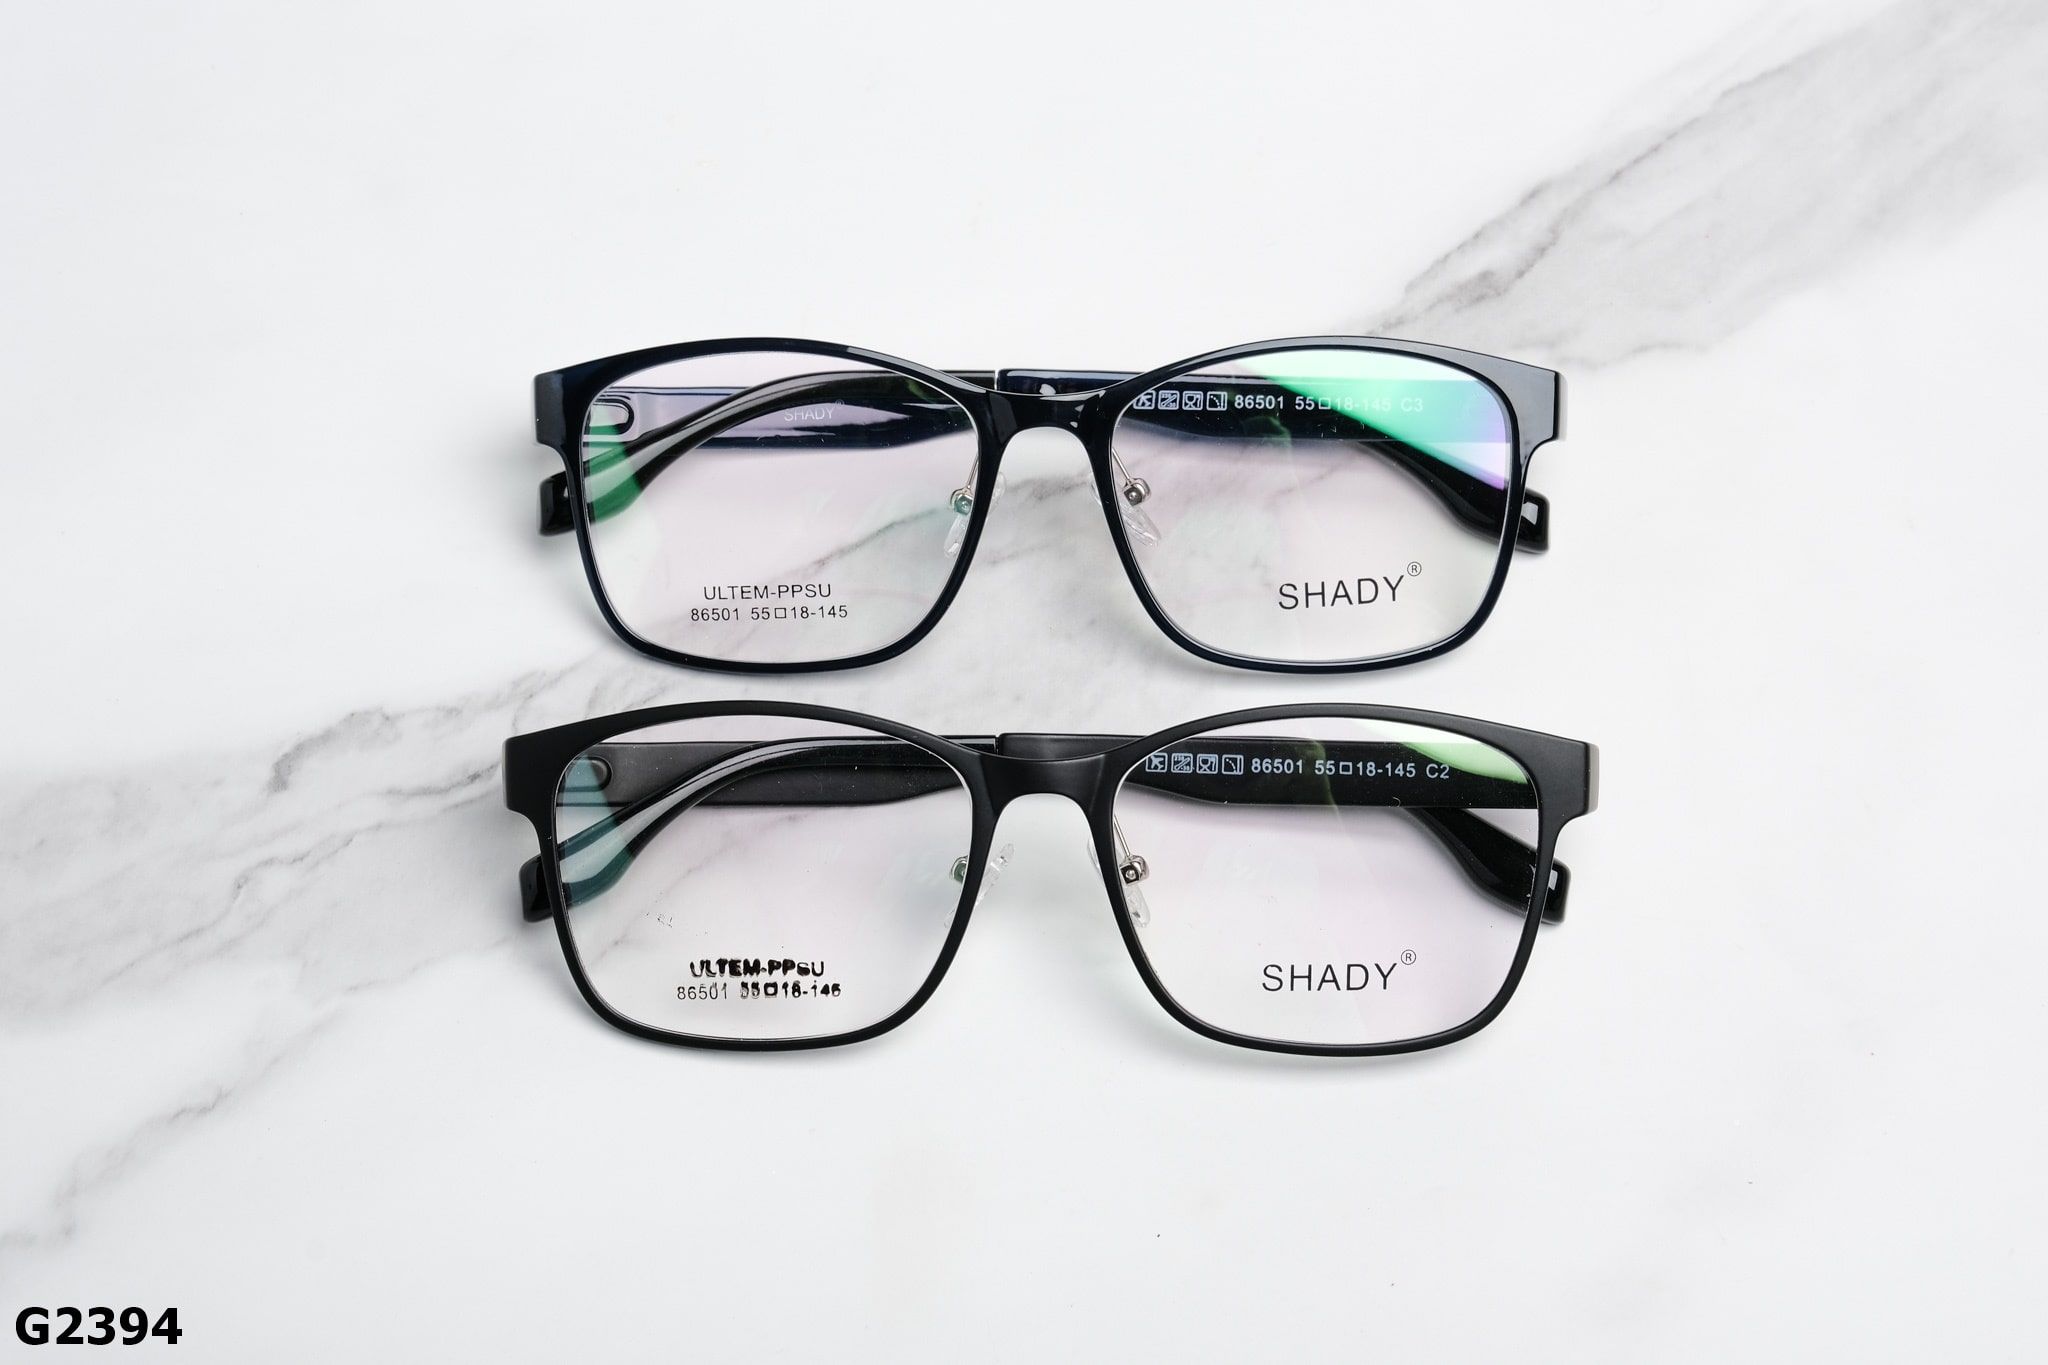  SHADY Eyewear - Glasses - G2394 